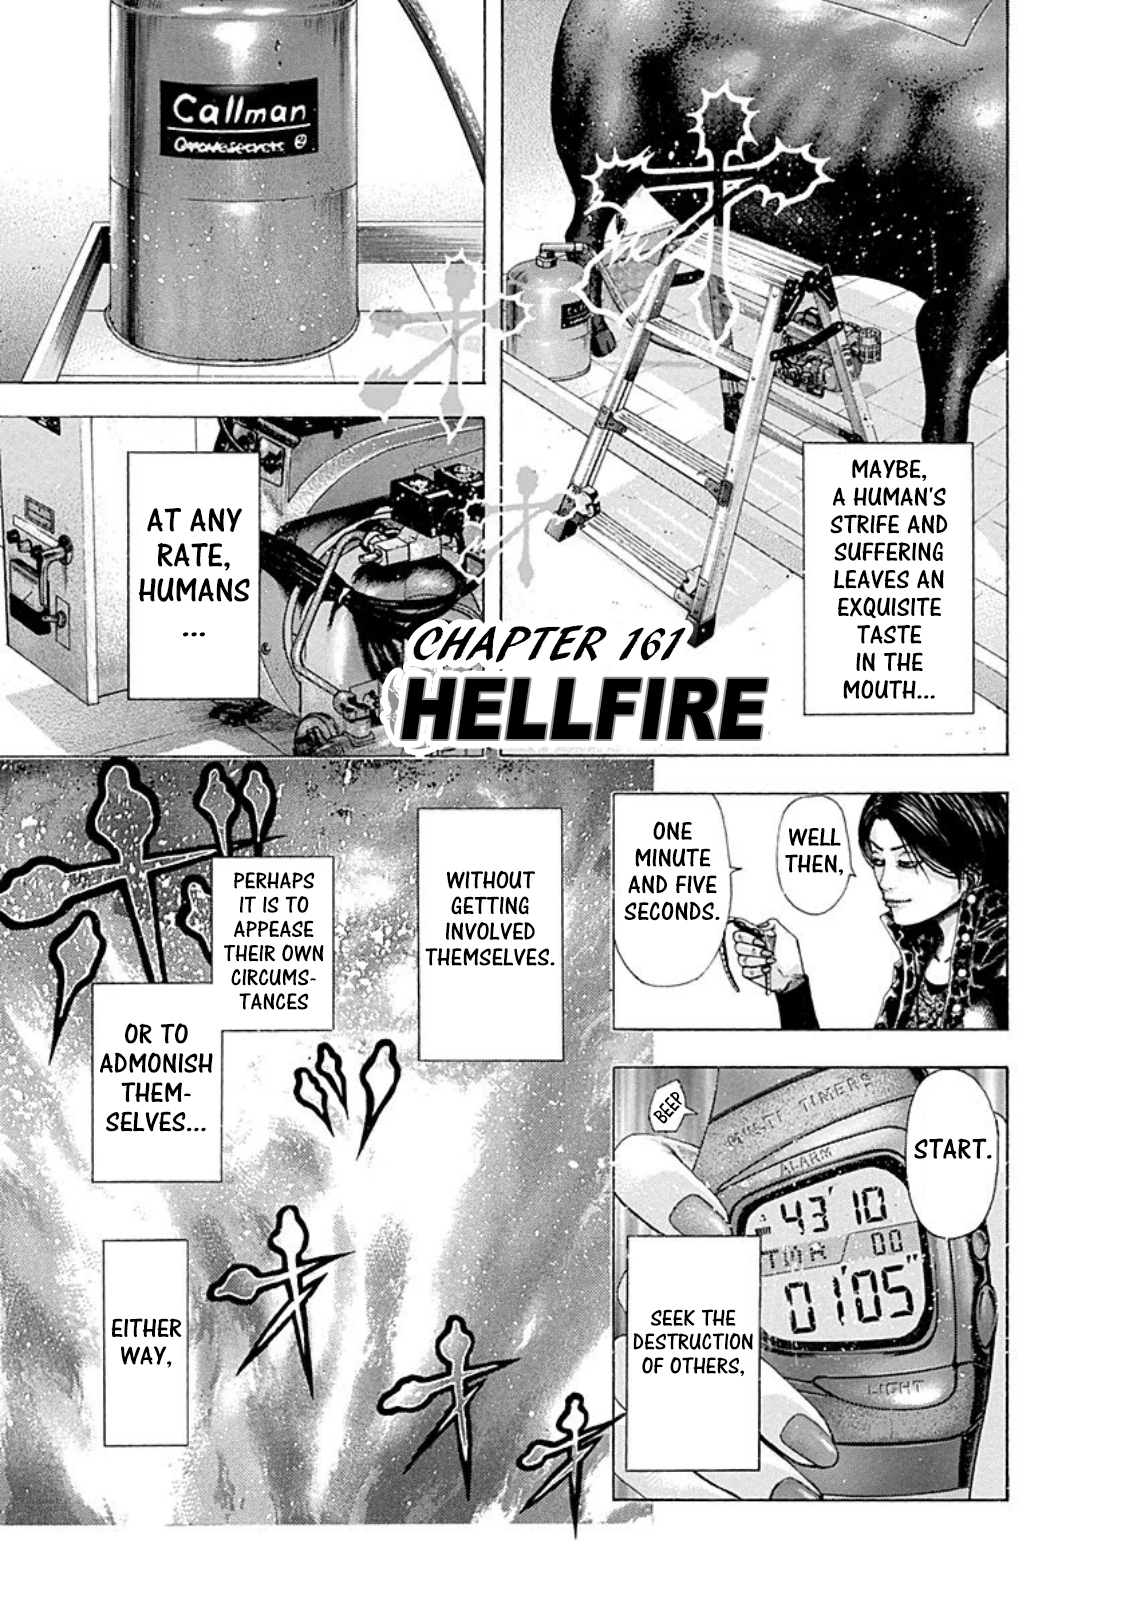 Usogui Vol. 15 Ch. 161 Hellfire